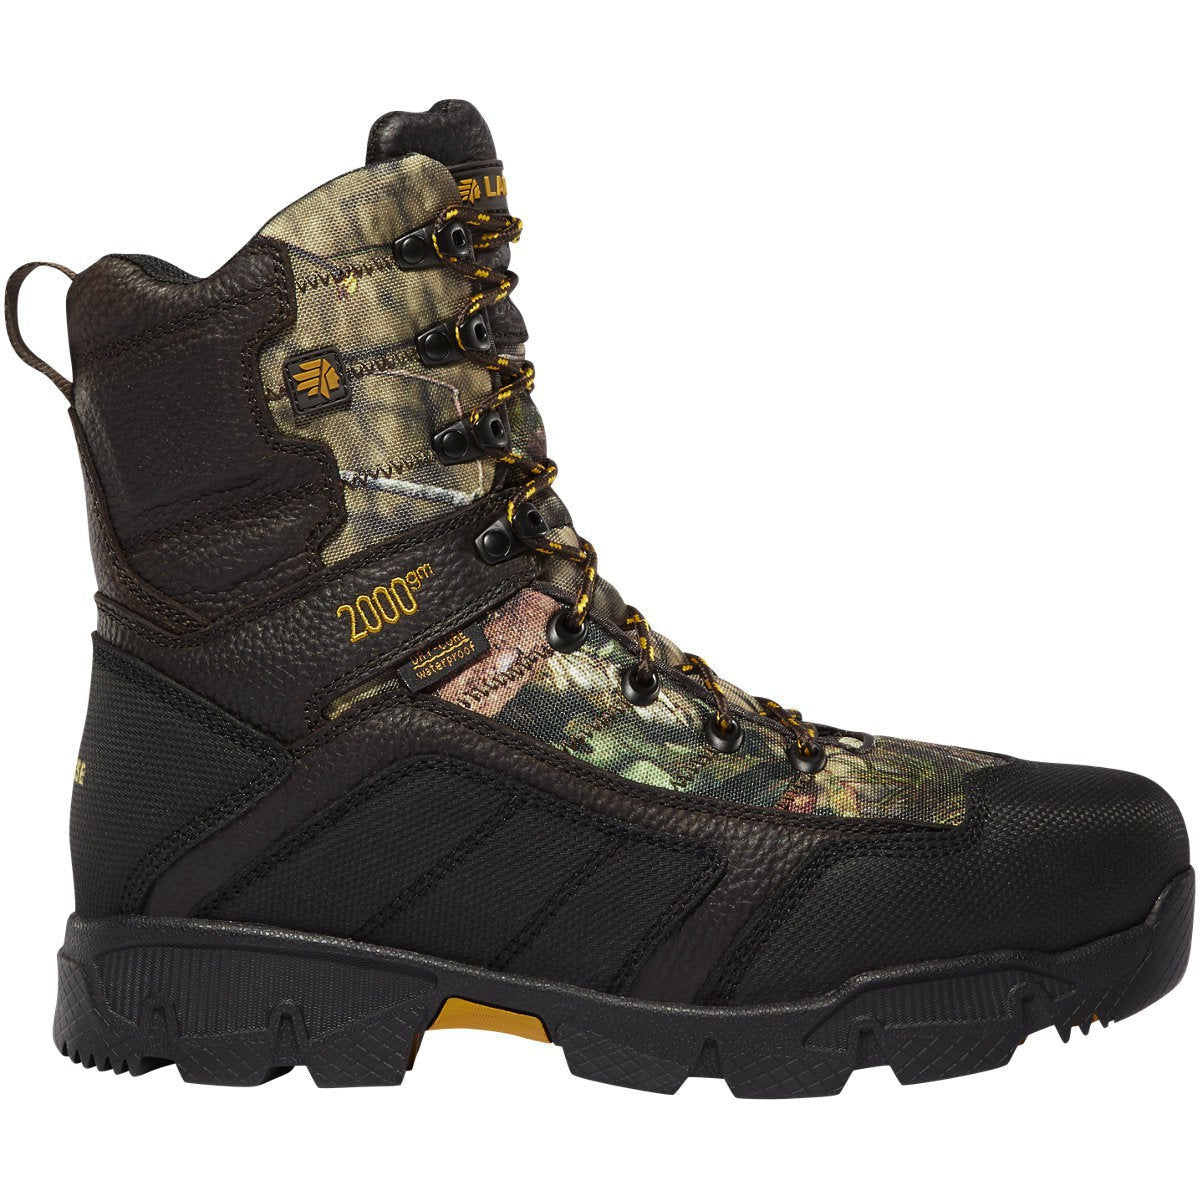 Lacrosse Men's Cold Snap 9" Plain Toe WP 2000G Hunt Boot -Mossy- 566712 8 / Medium / Mossy Oak - Overlook Boots